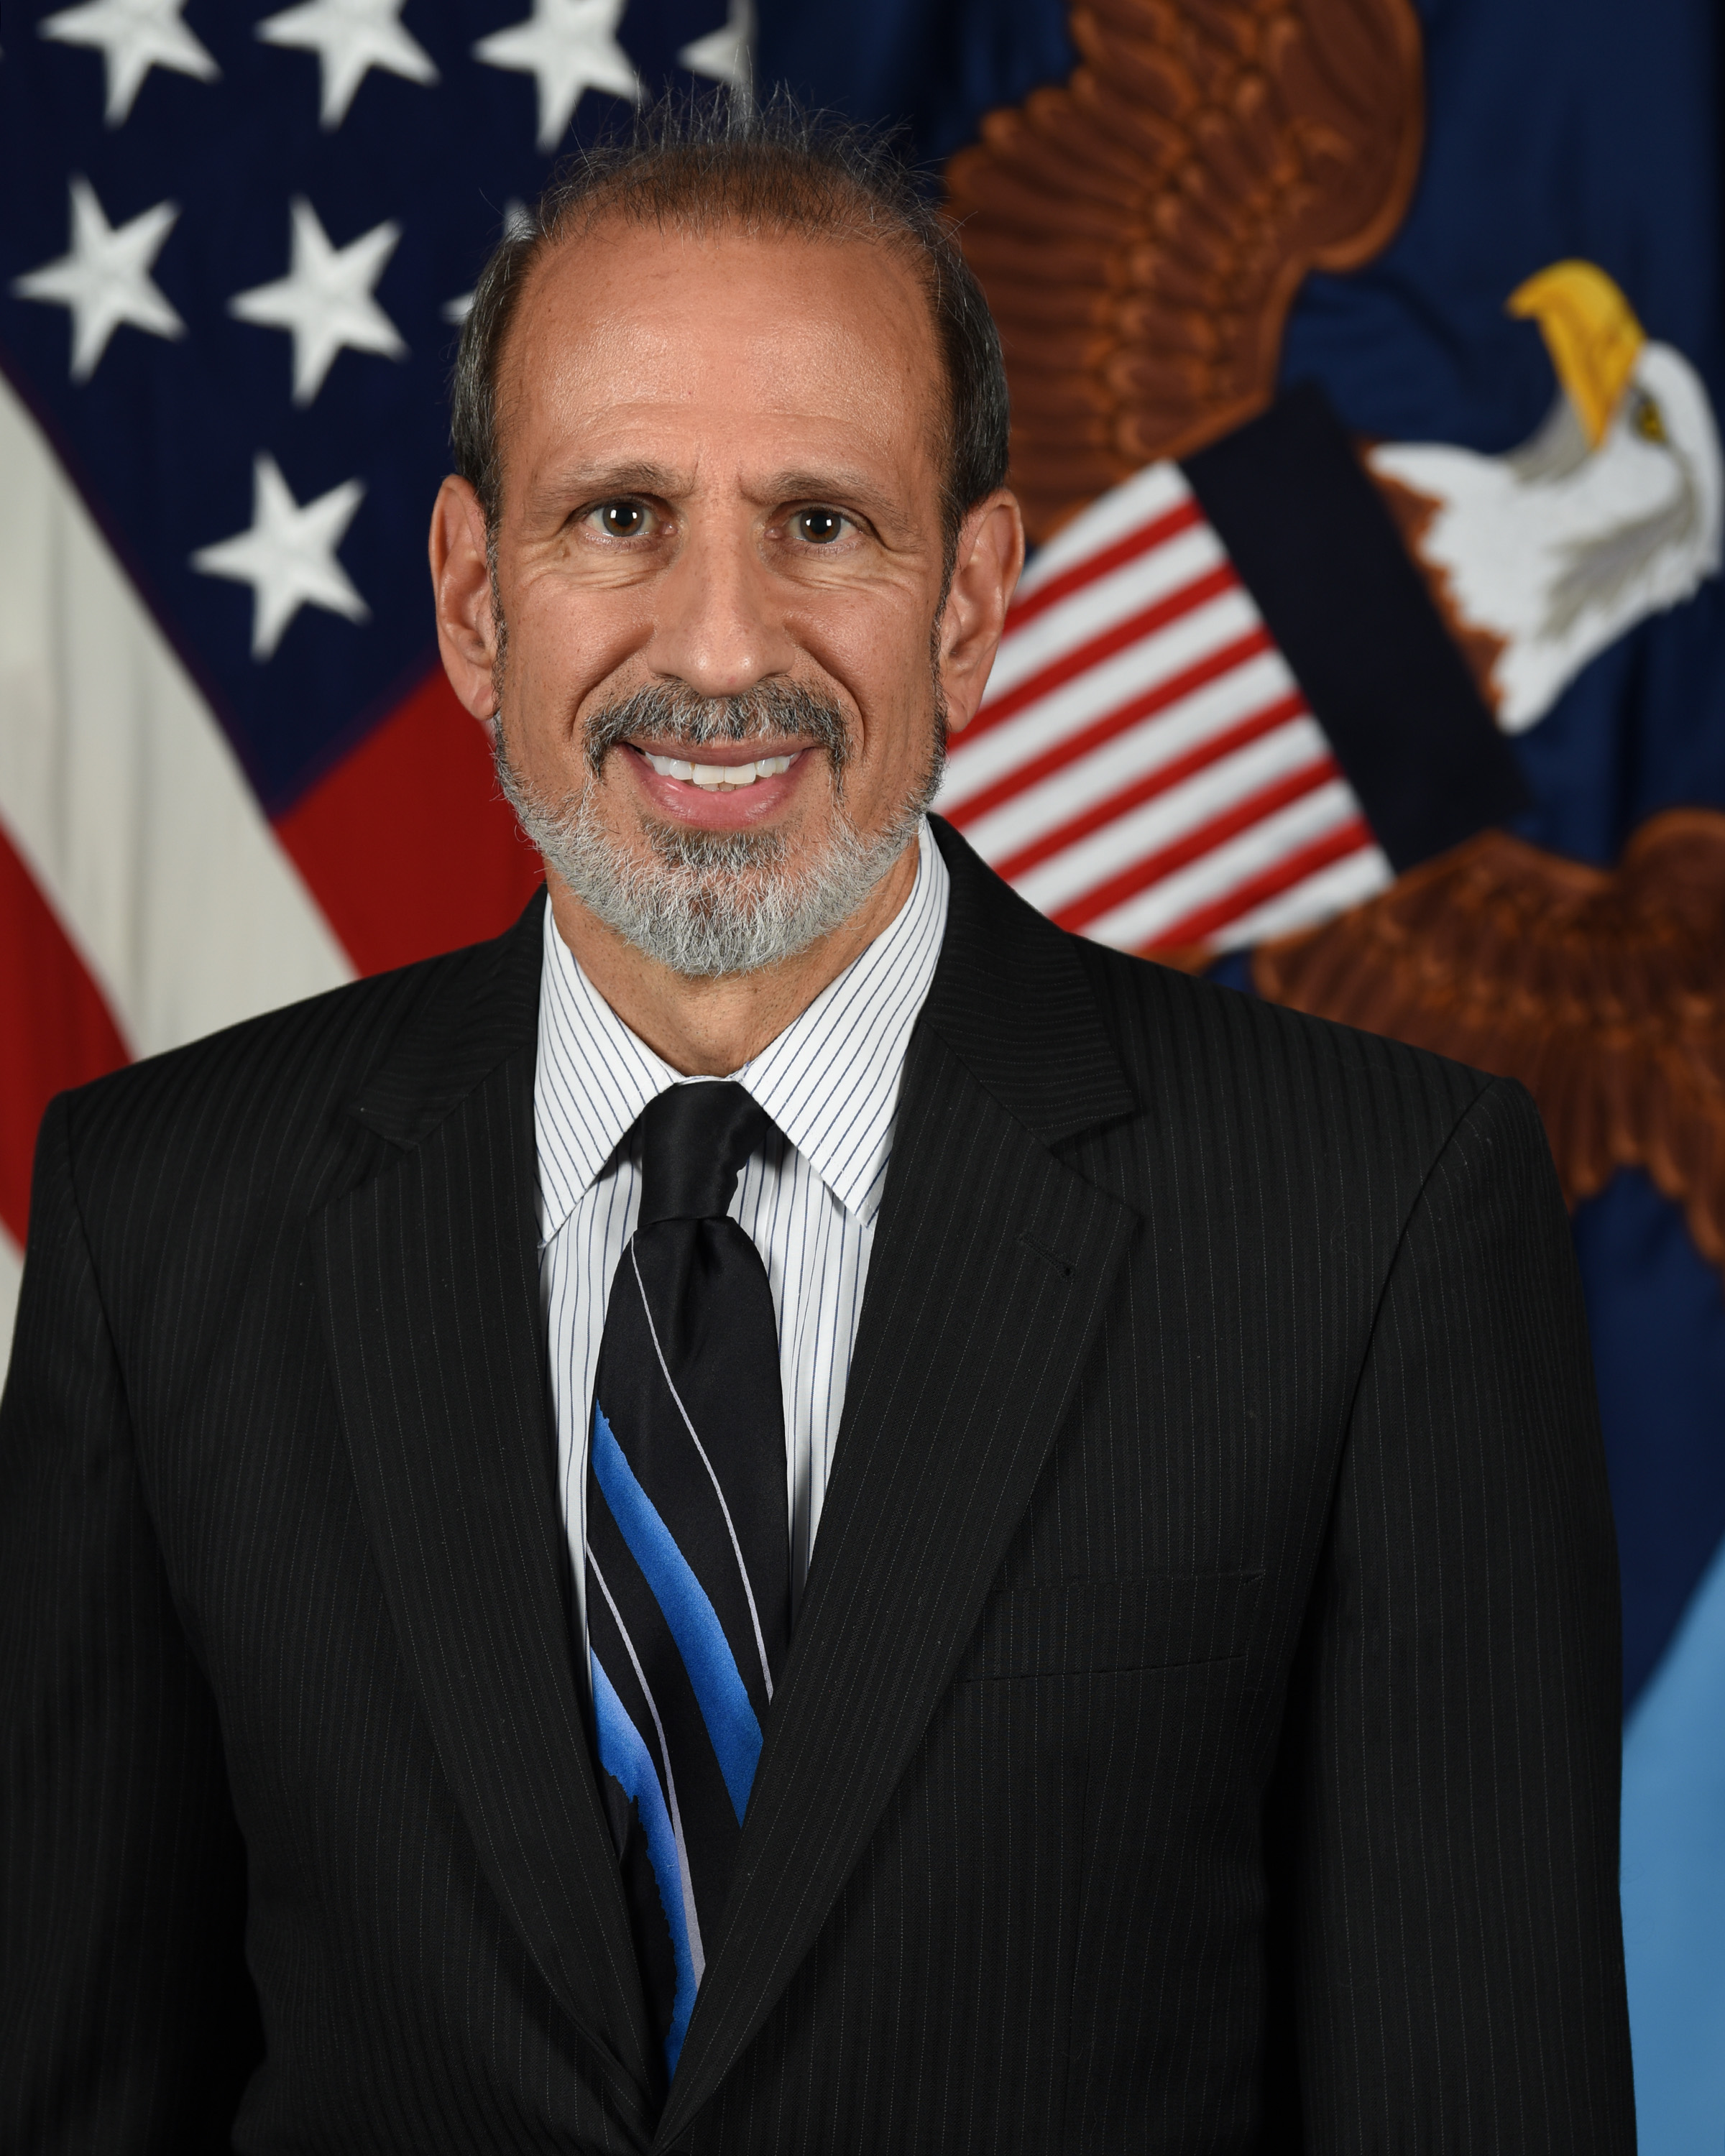 Michael J. McCord - Under Secretary of Defense (Comptroller)/CFO